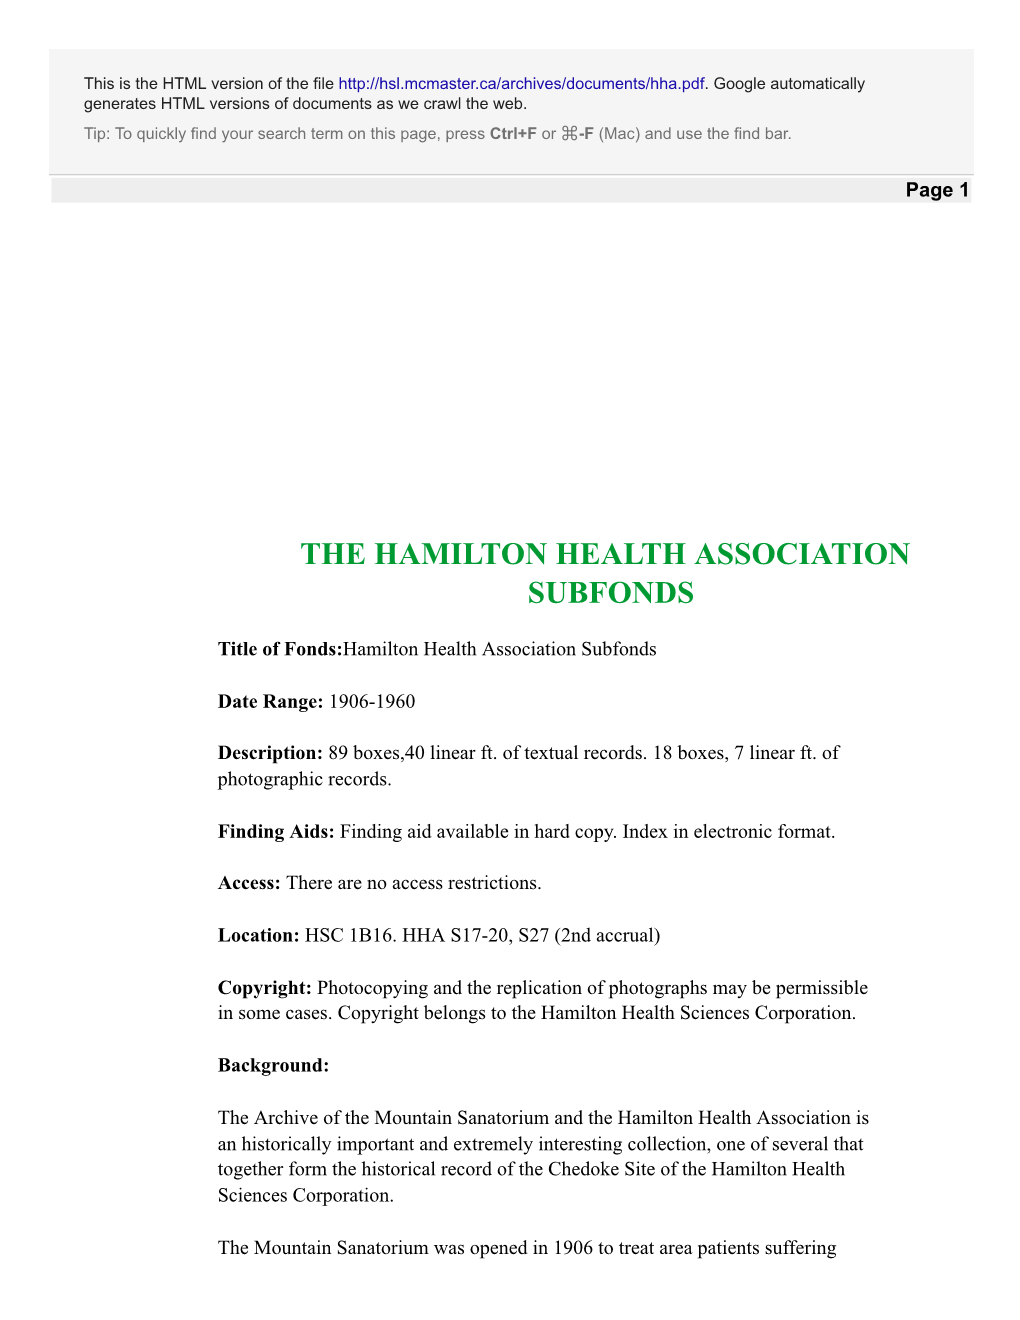 The Hamilton Health Association Subfonds